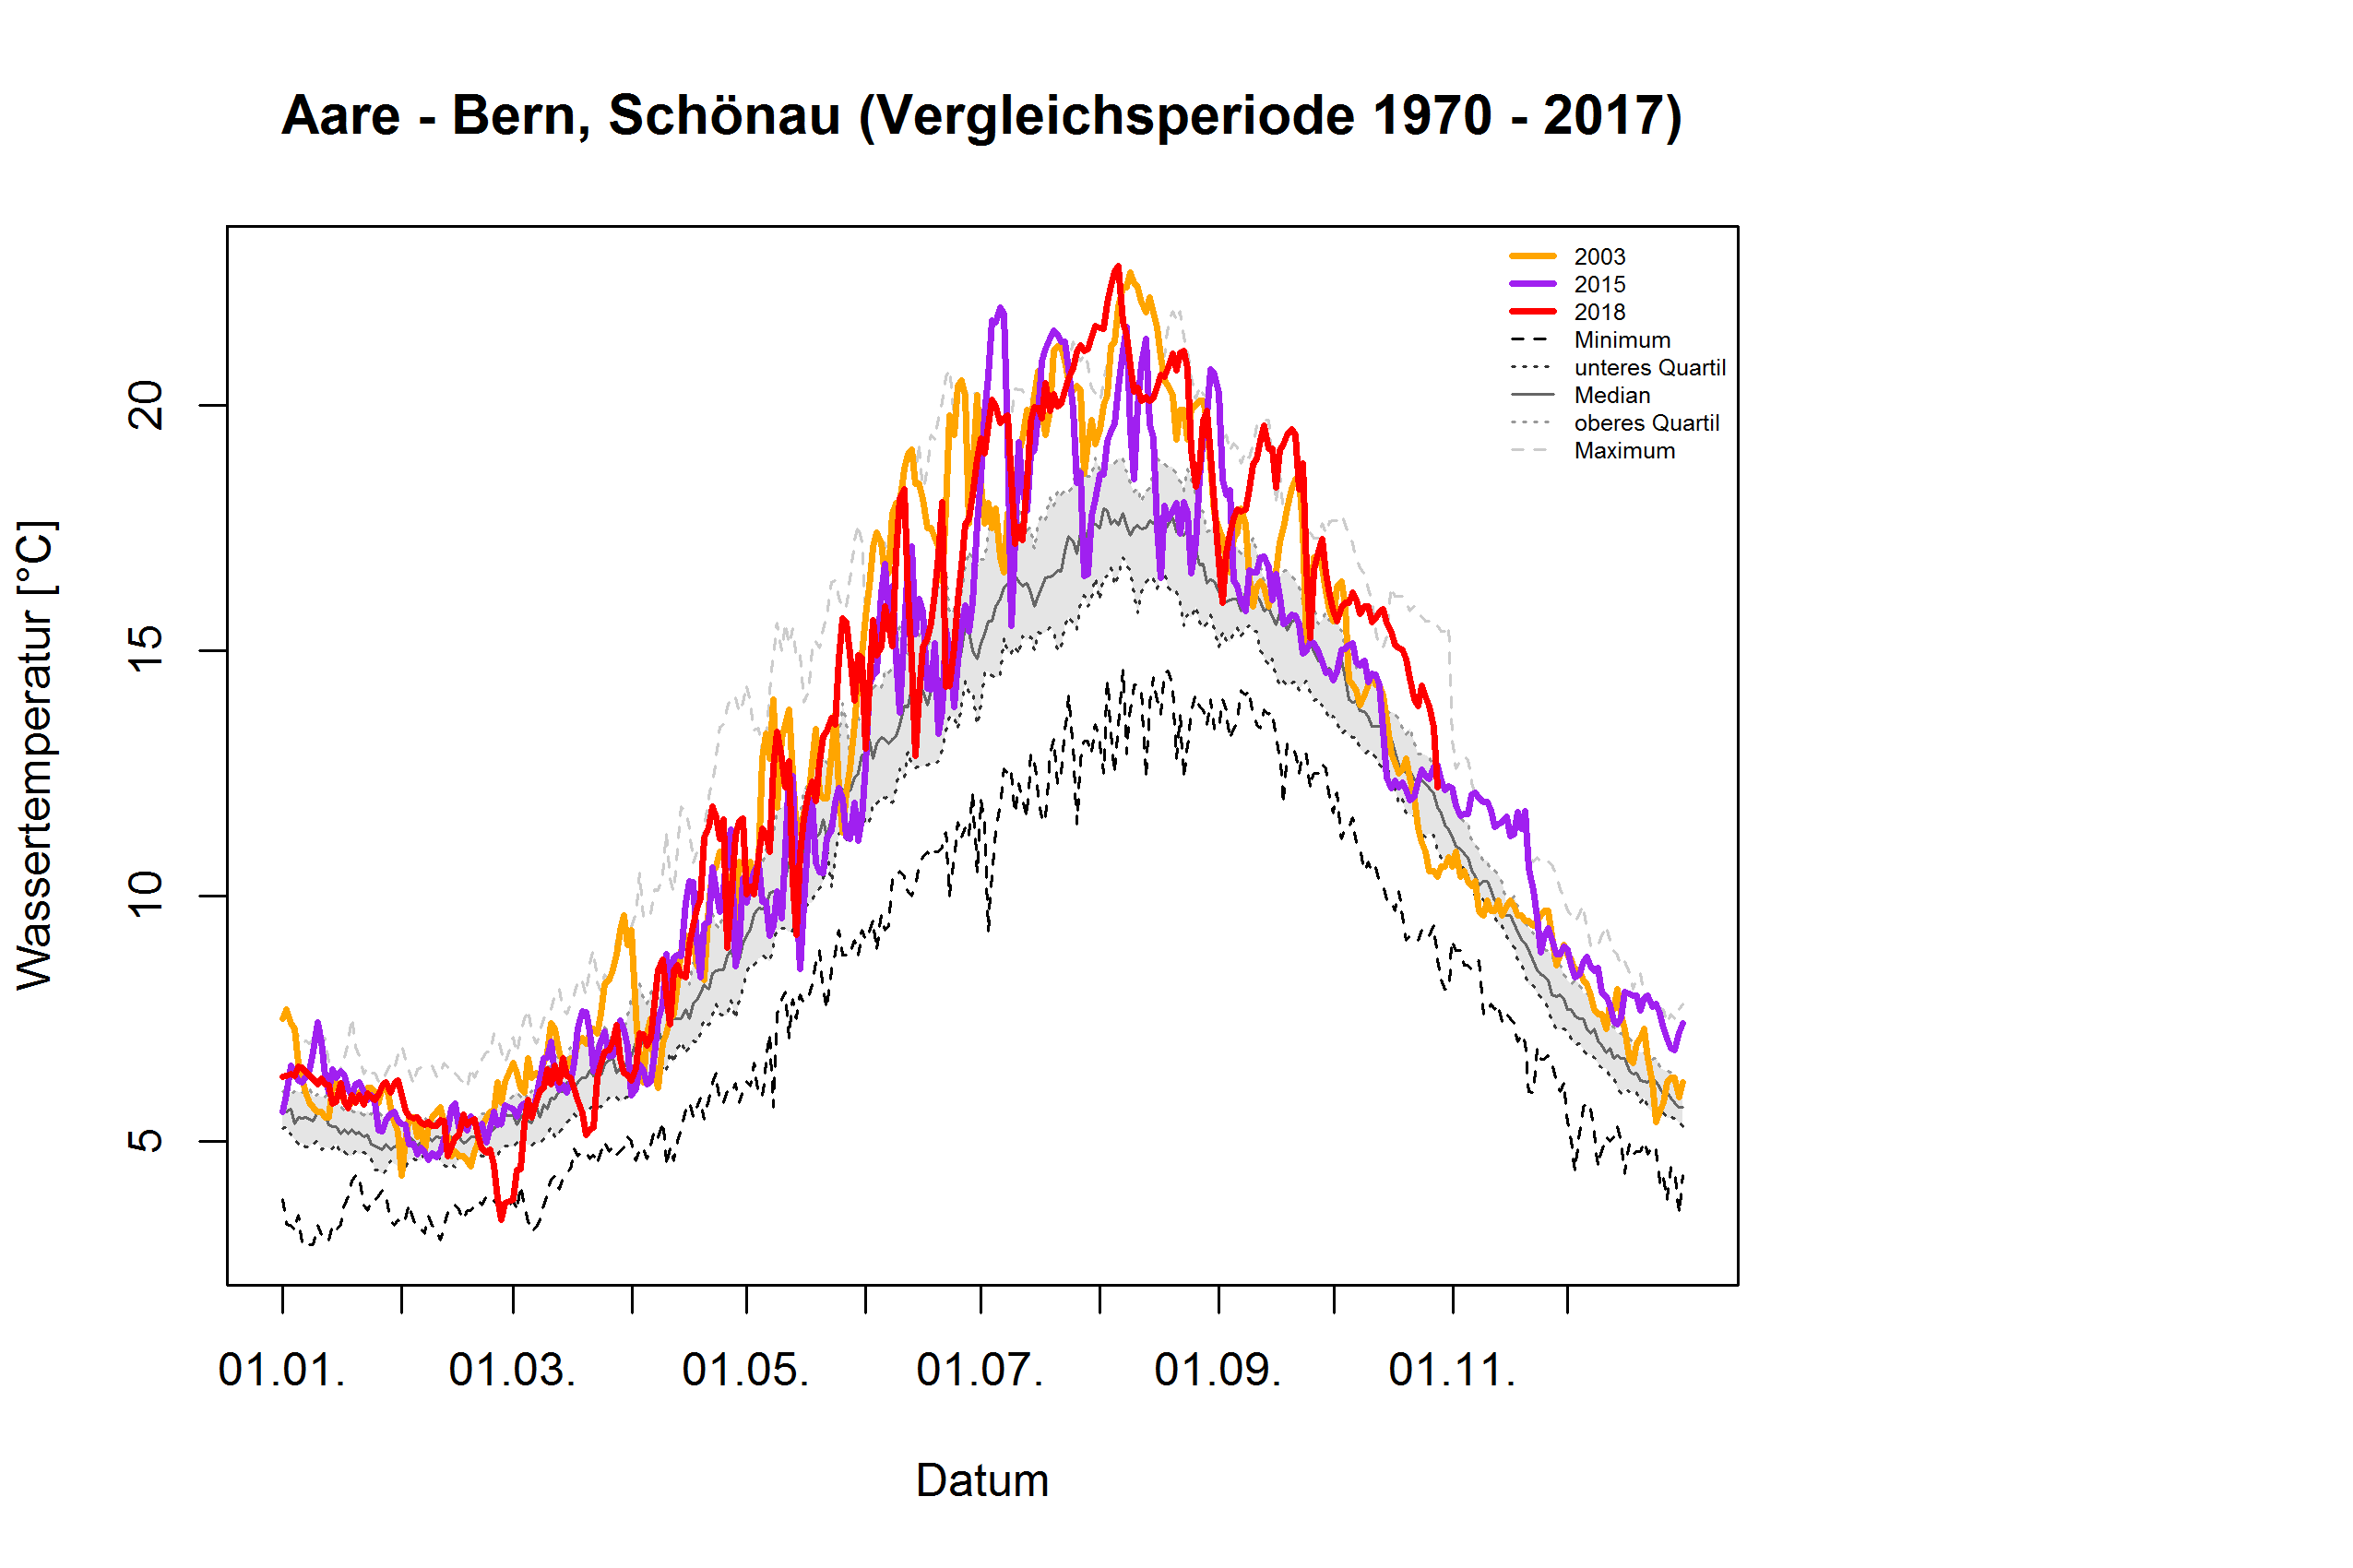 Aare - Bern: Vergleichsperiode 1970 - 2017